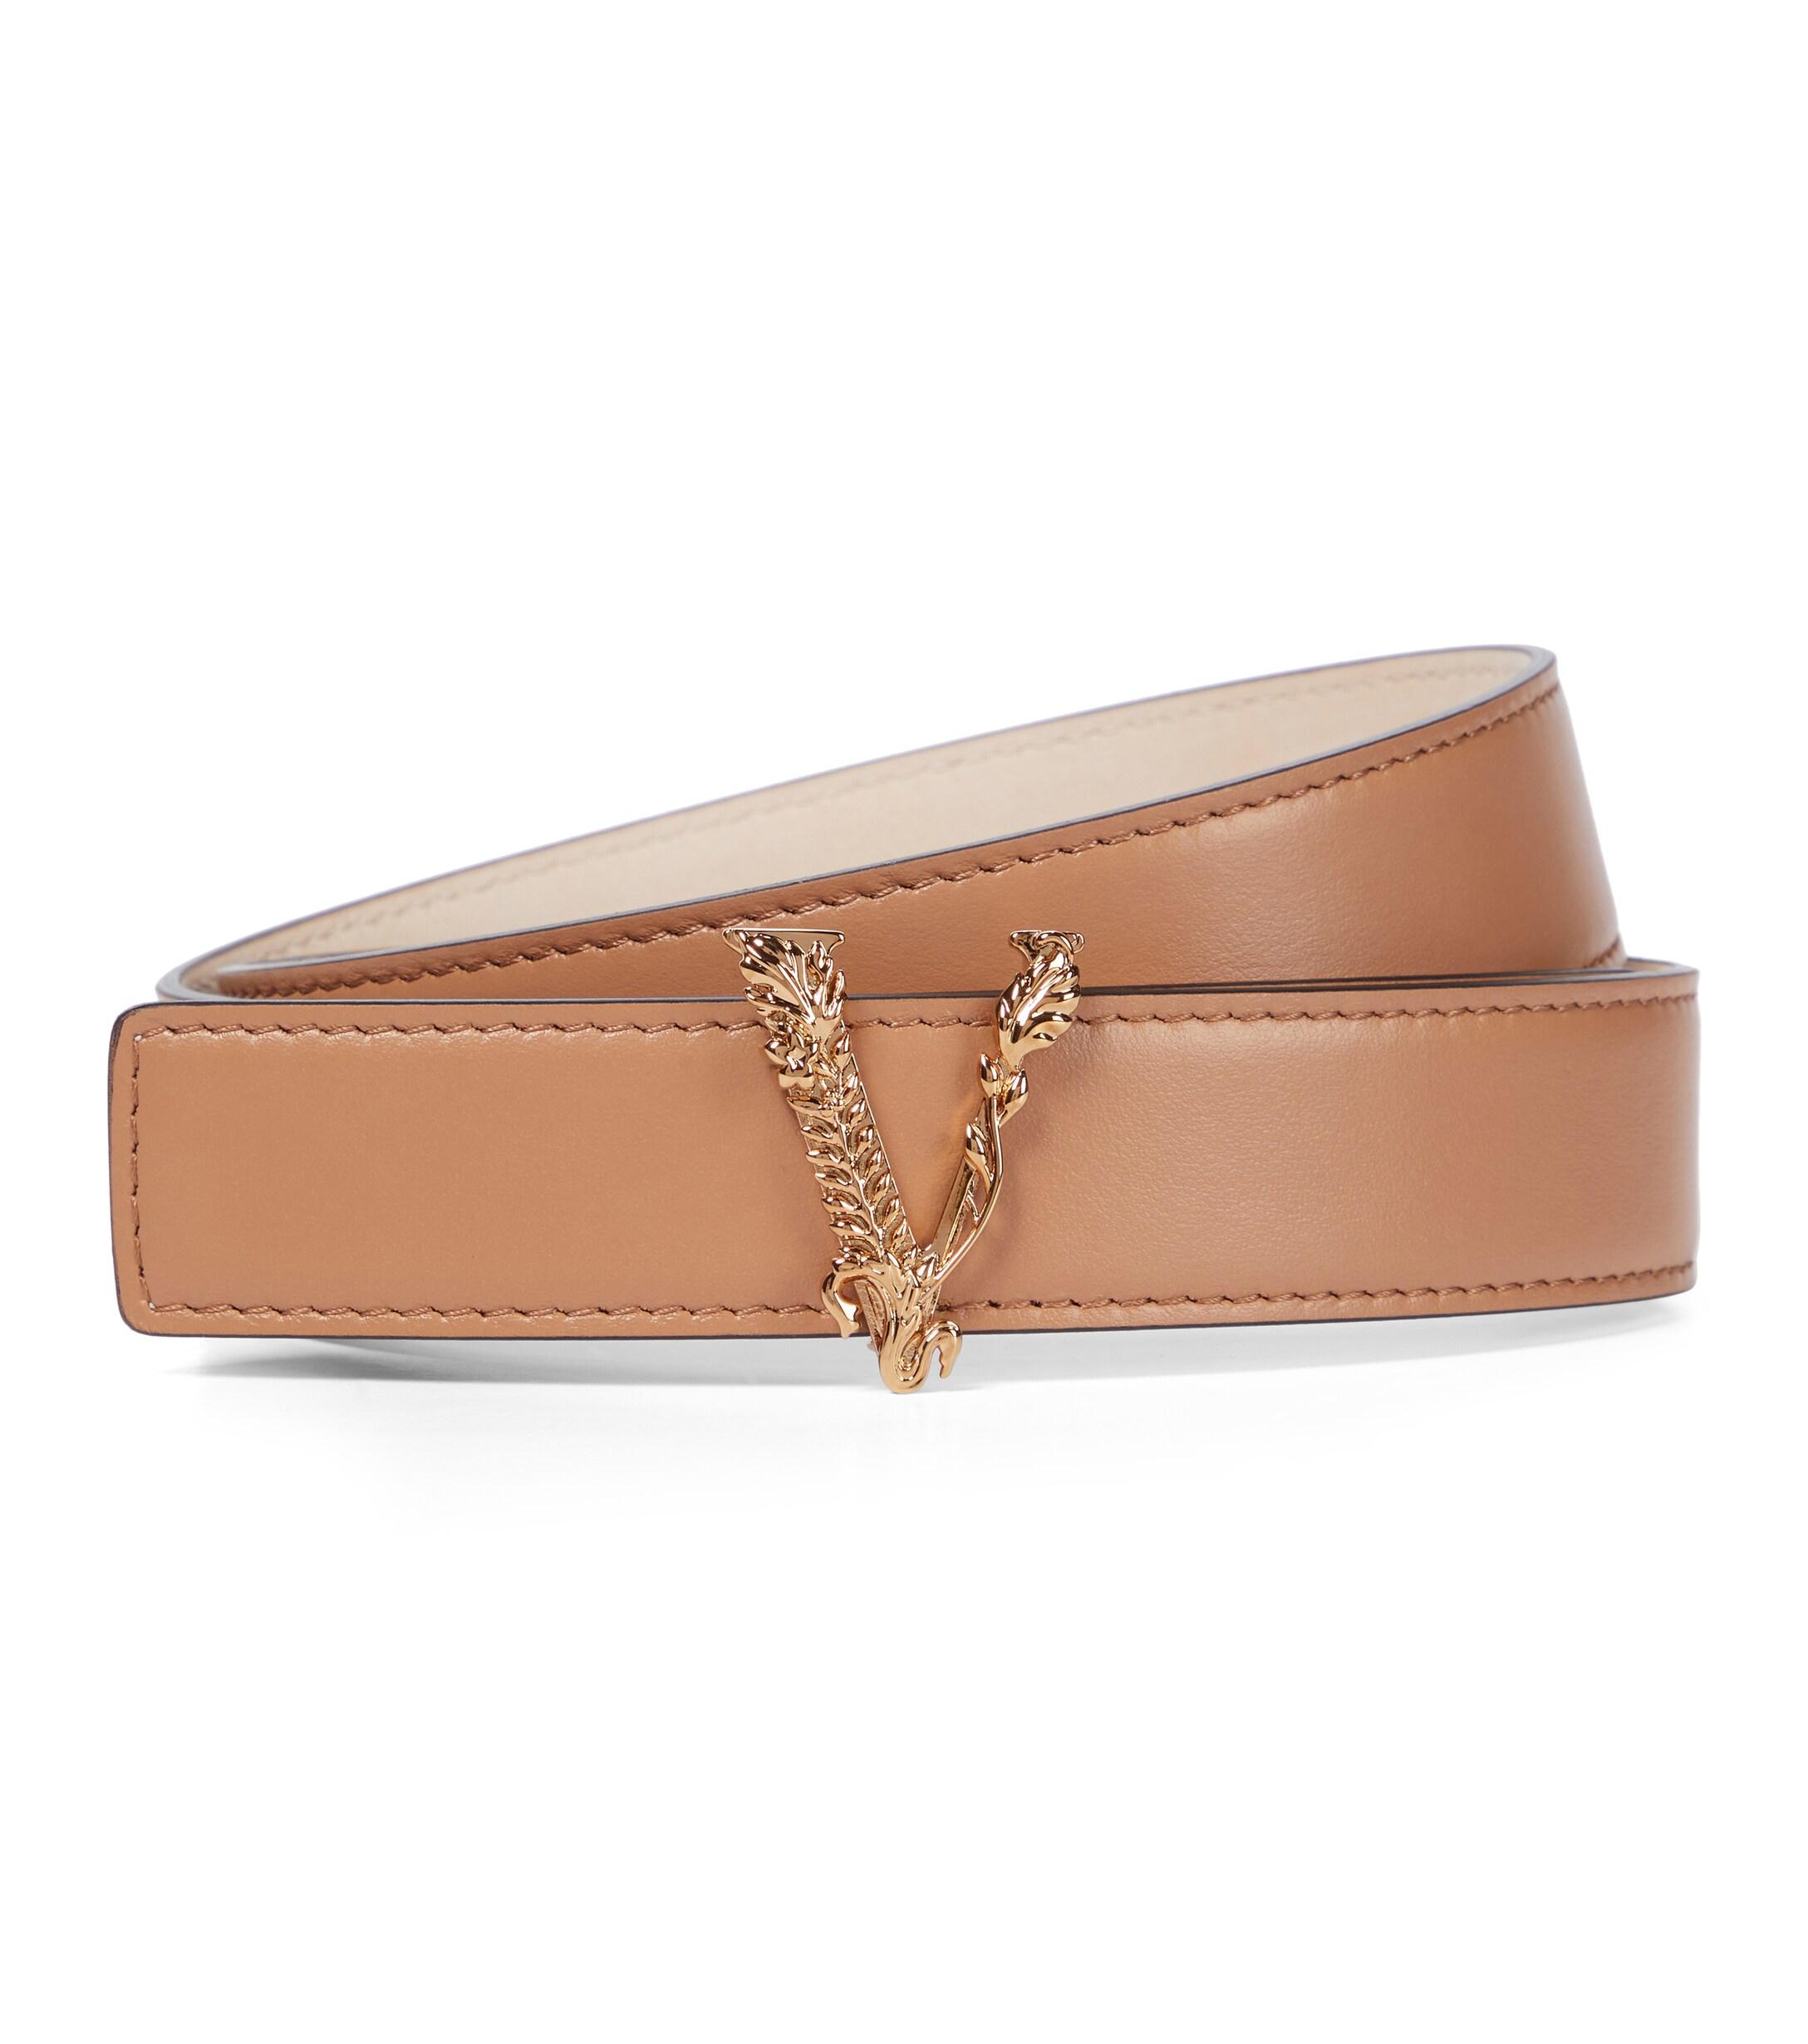 Versace Virtus Leather Belt in Brown - Lyst